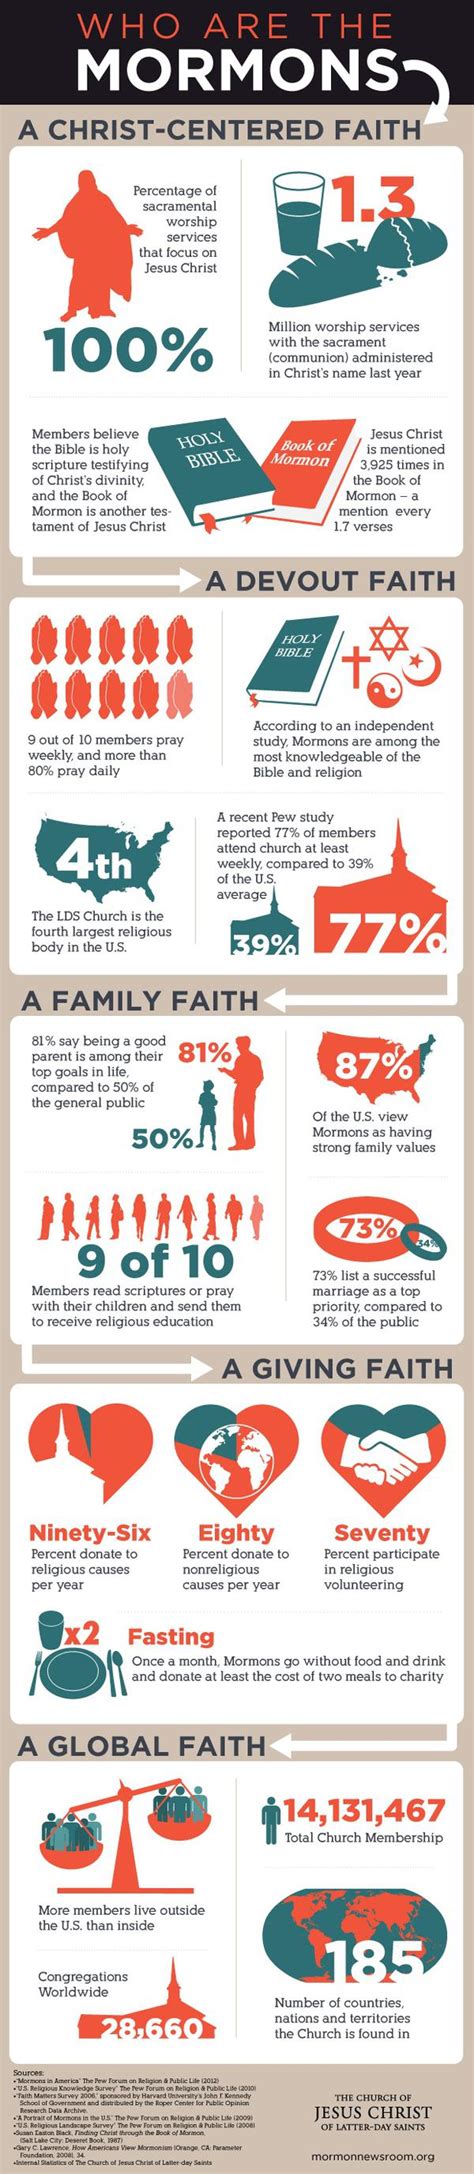 Mormon Basic Beliefs